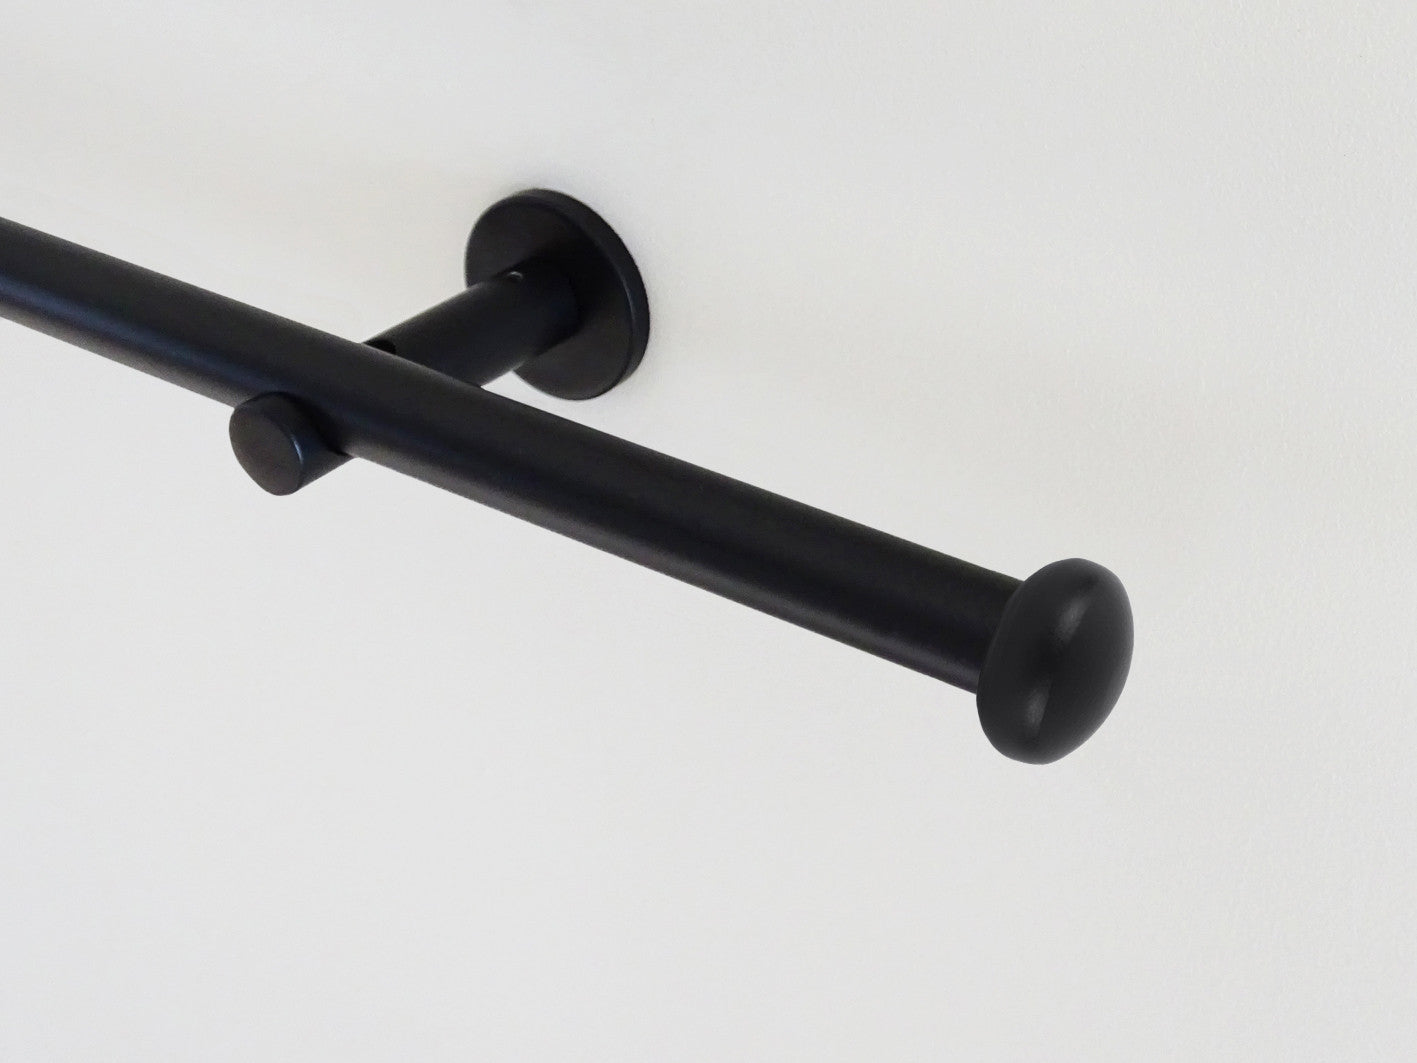 19mm skinny black curtain rod set with elliptical end